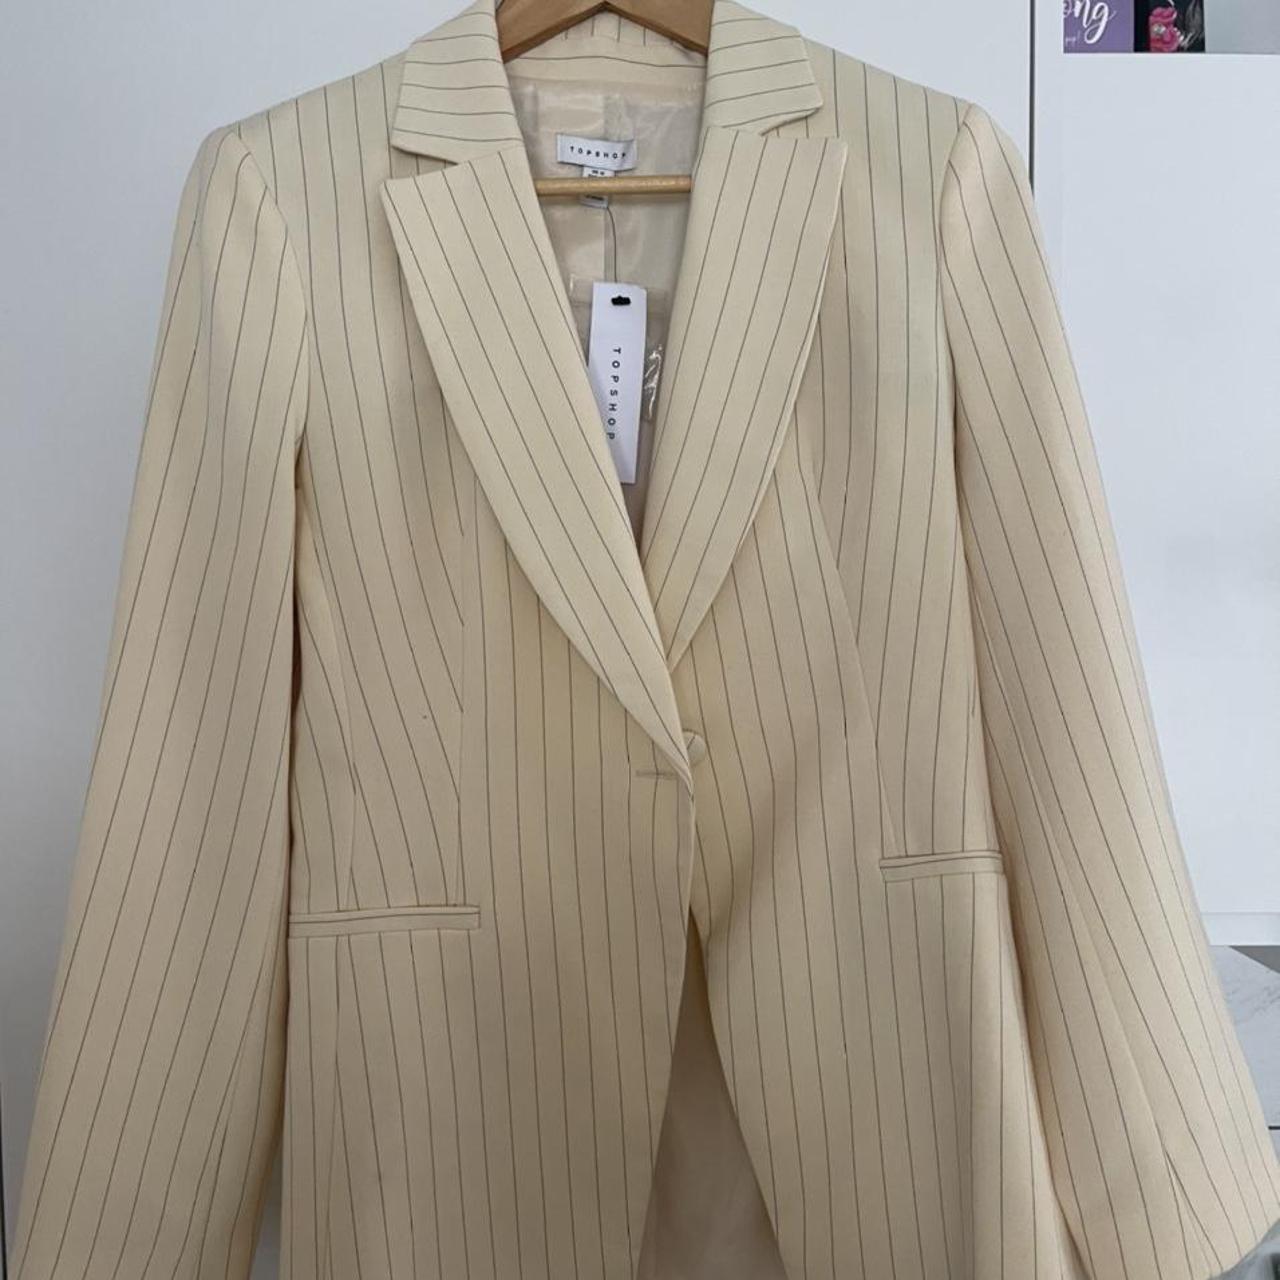 Topshop cream yellow pinstripe suit size 12 in... - Depop